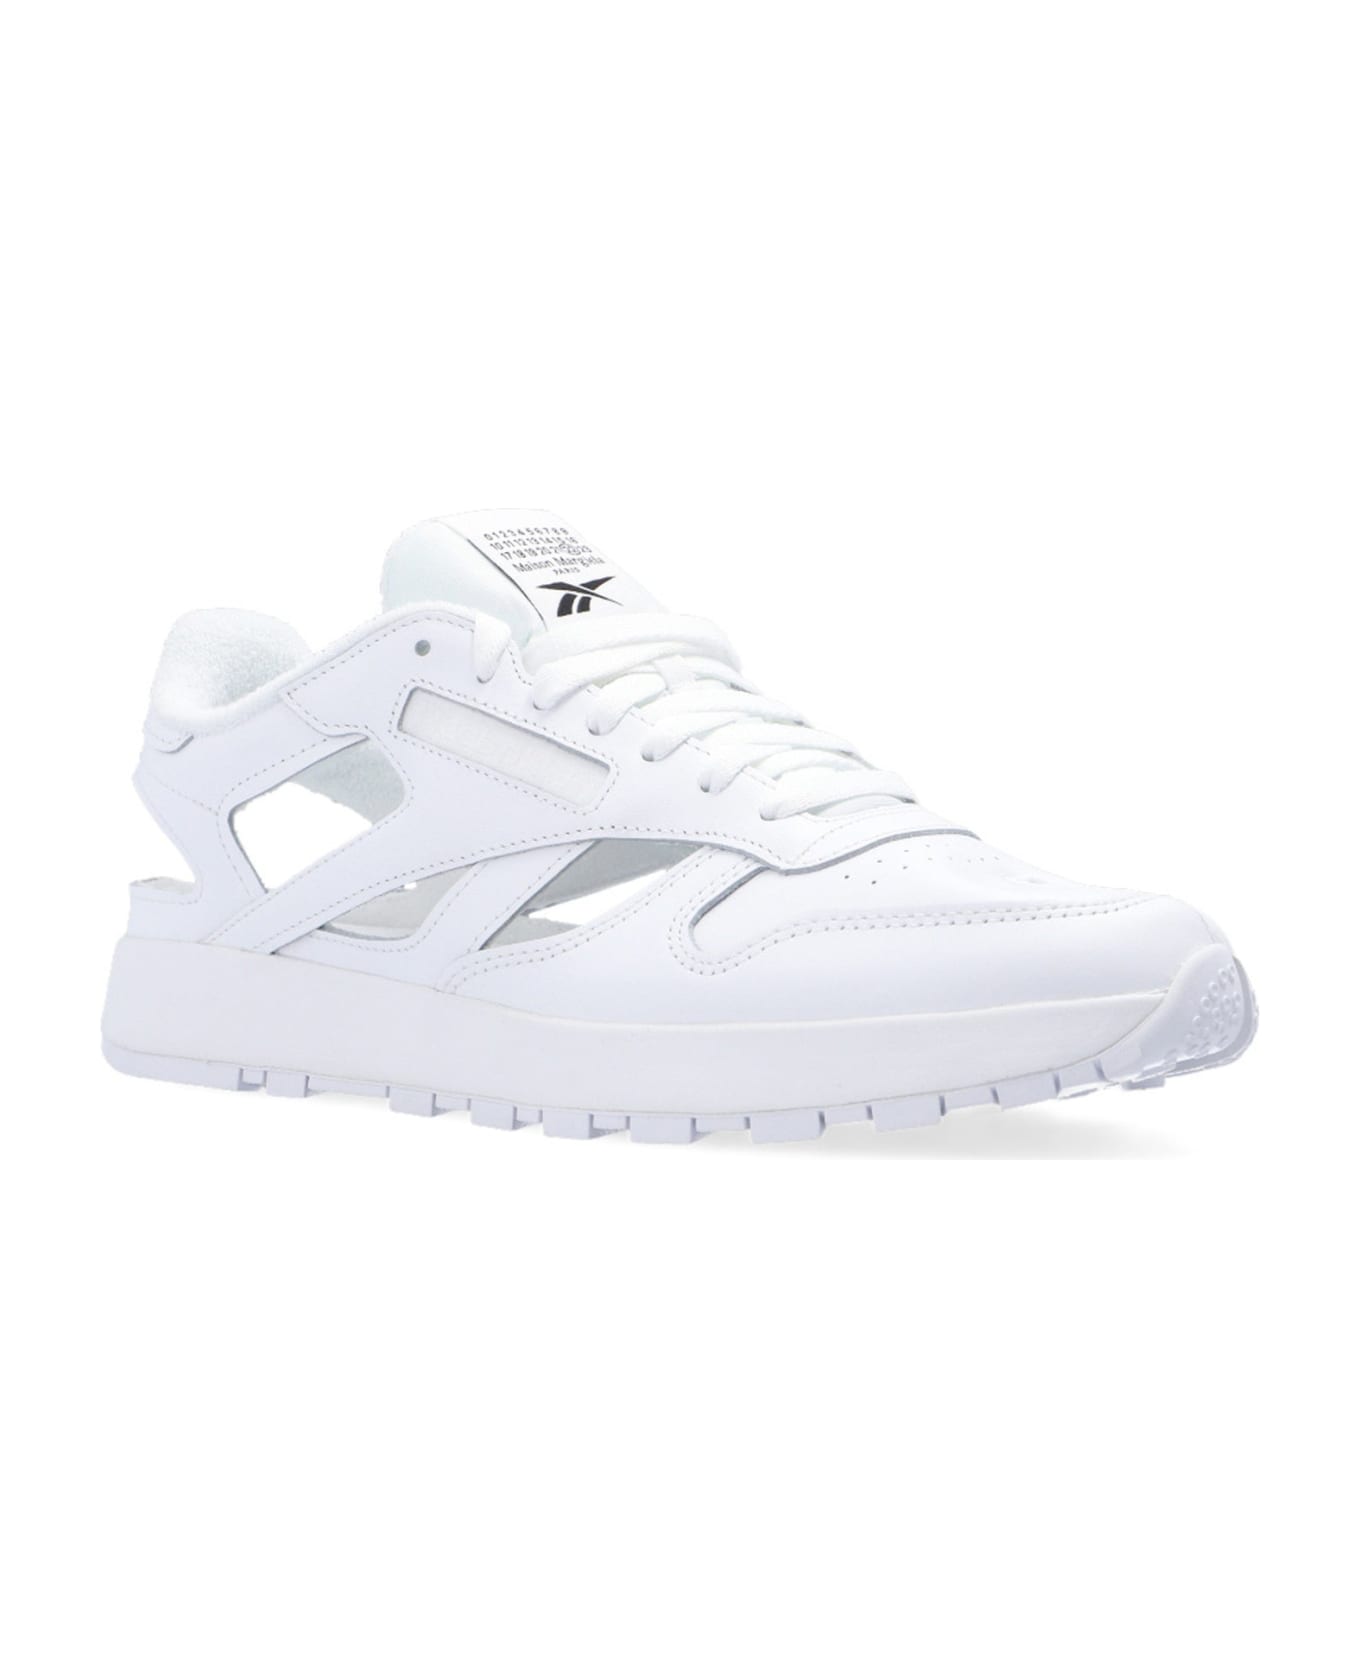 Maison Margiela Leather Sneaker - White